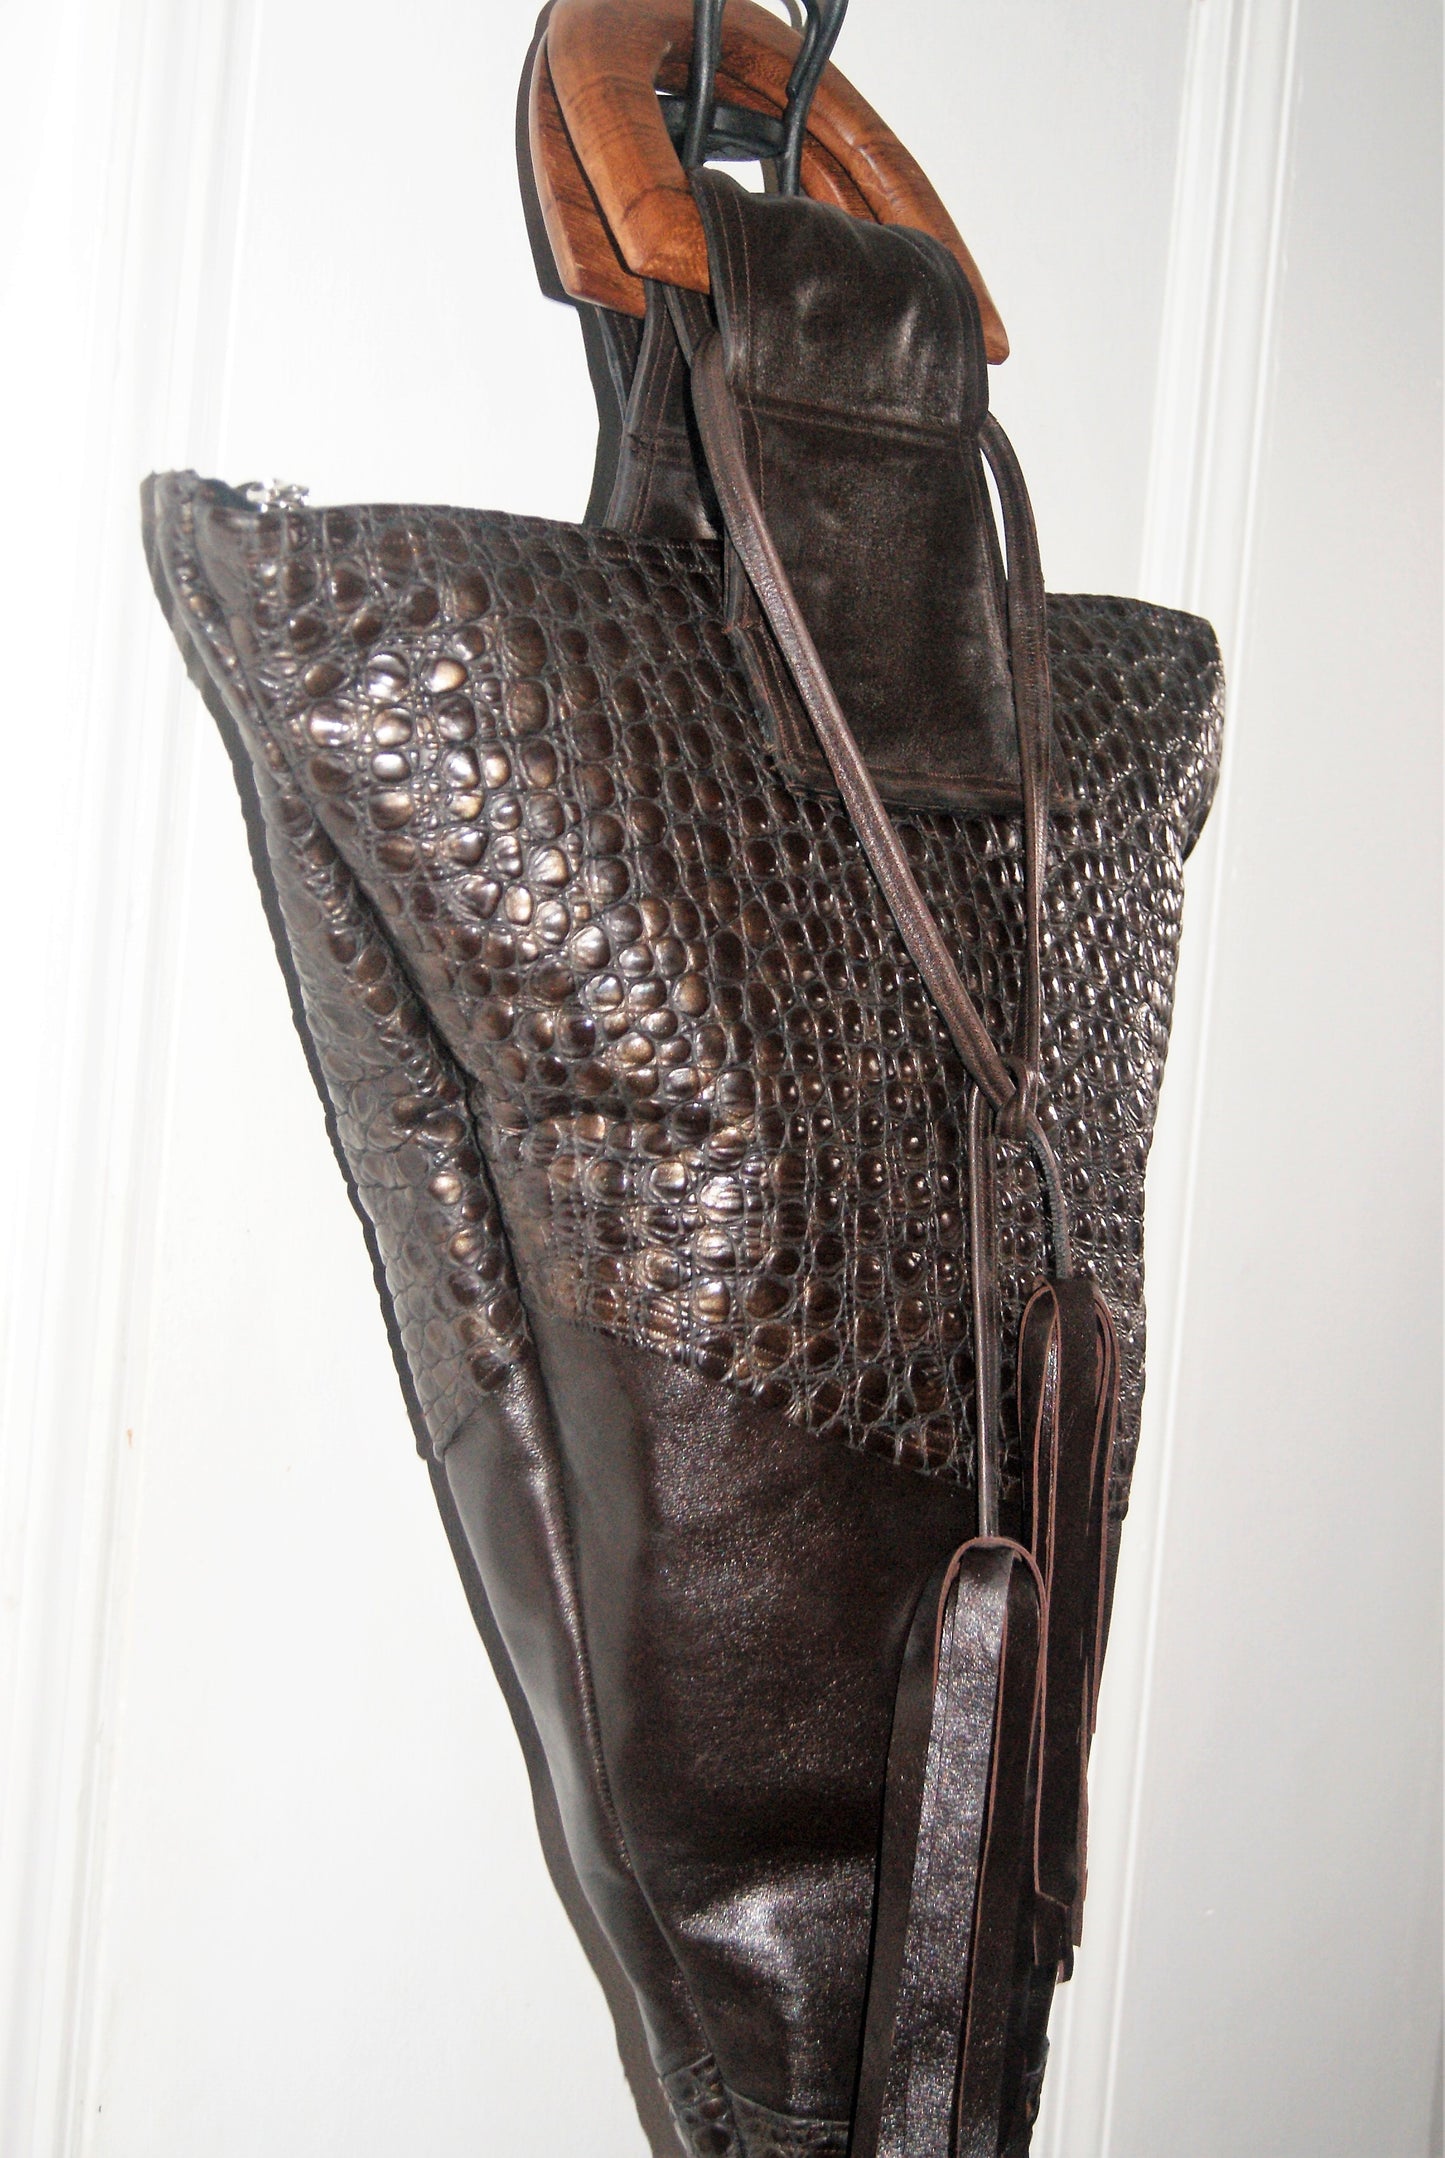 Queen Tiye-chocolate brown-handbag                     #Q110